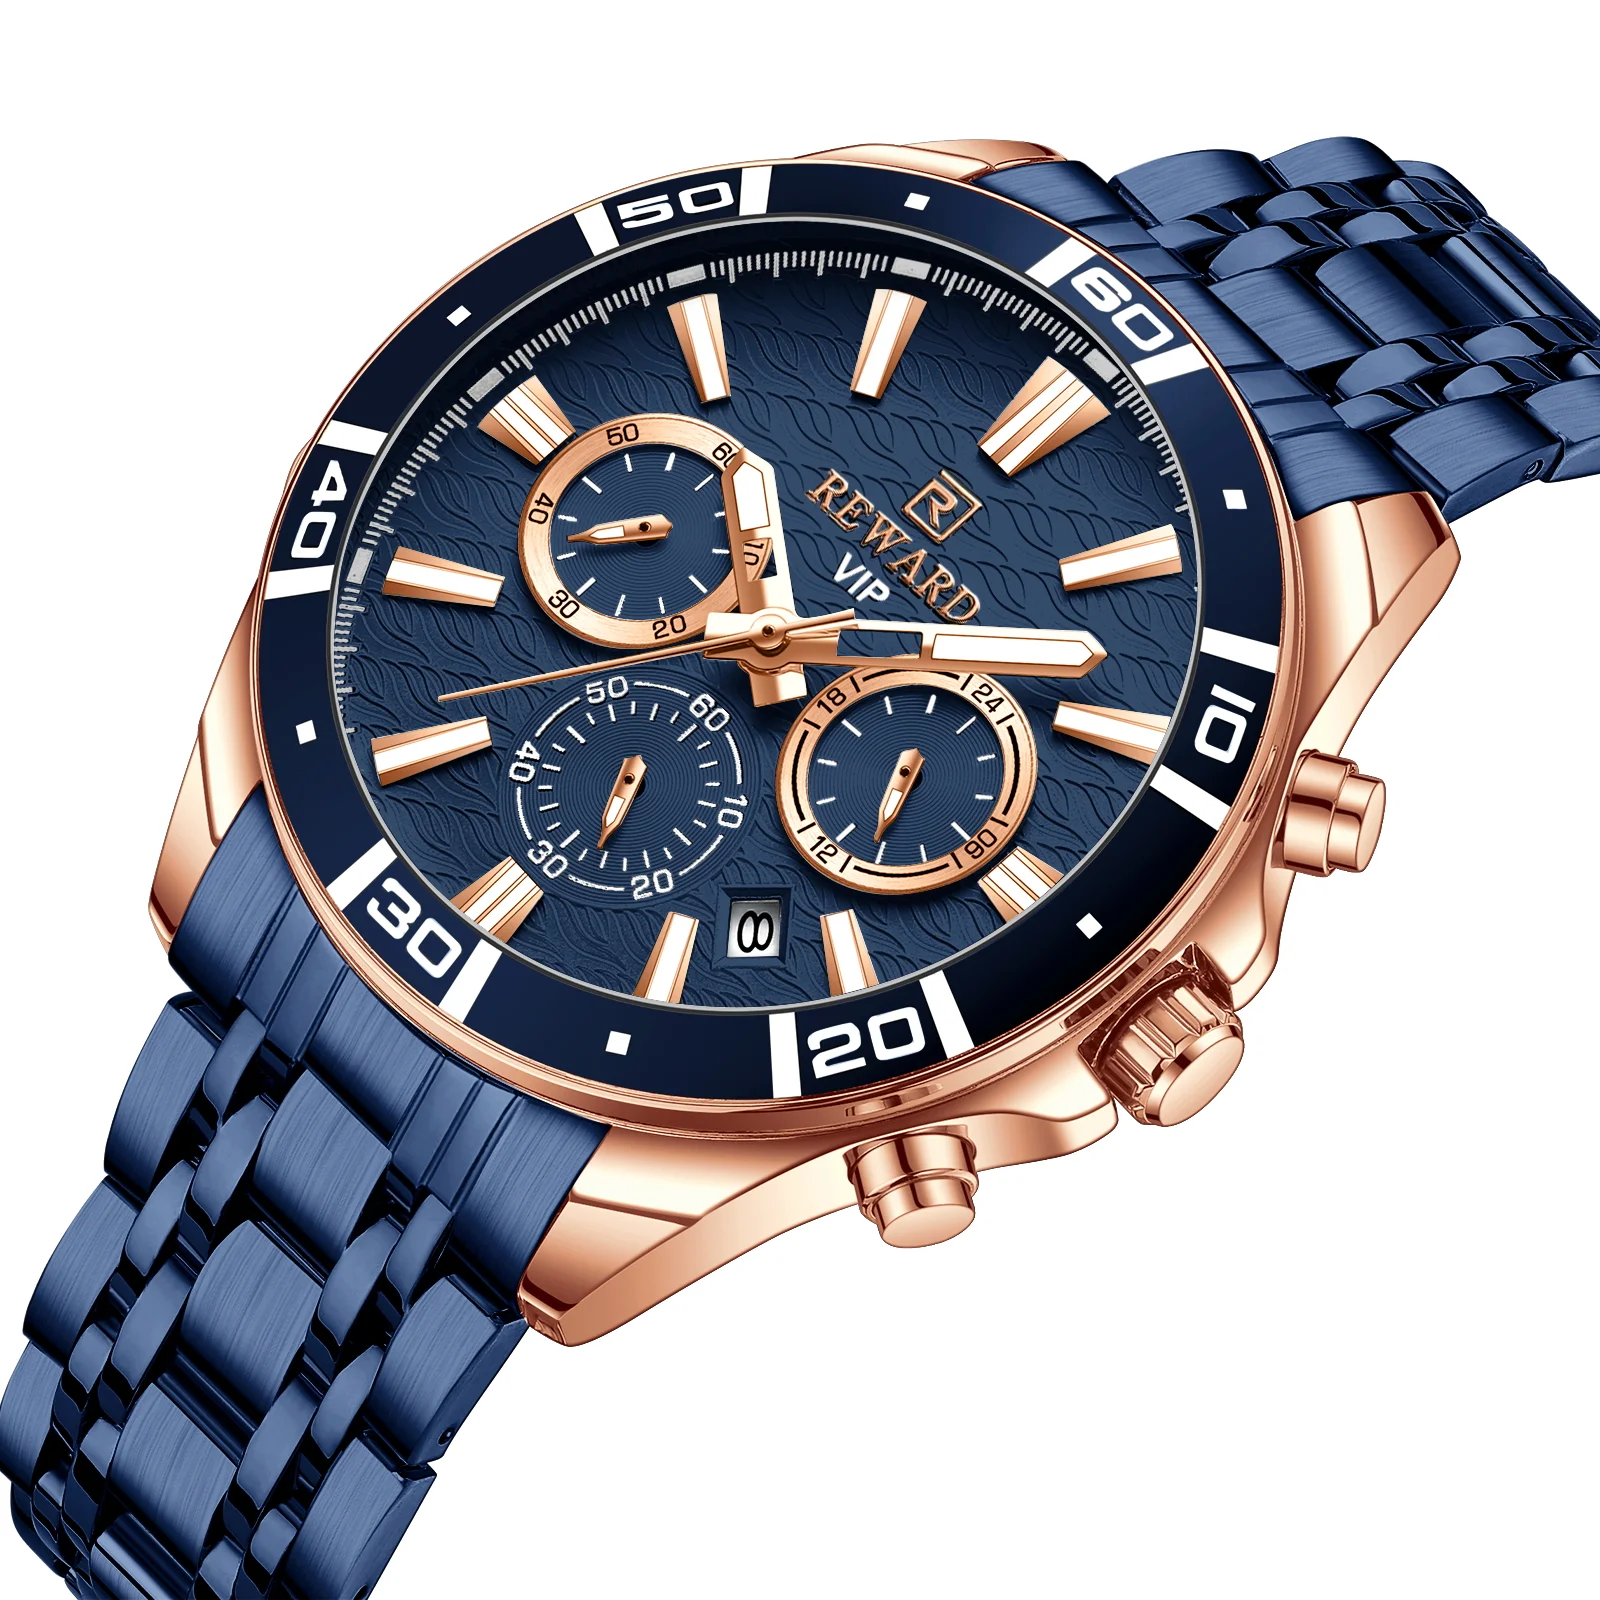 Reward Wholesale Chronograph Quart Watches Men Wrist Luxury Sport Source Watch Factory OEM/ODM RD81134M